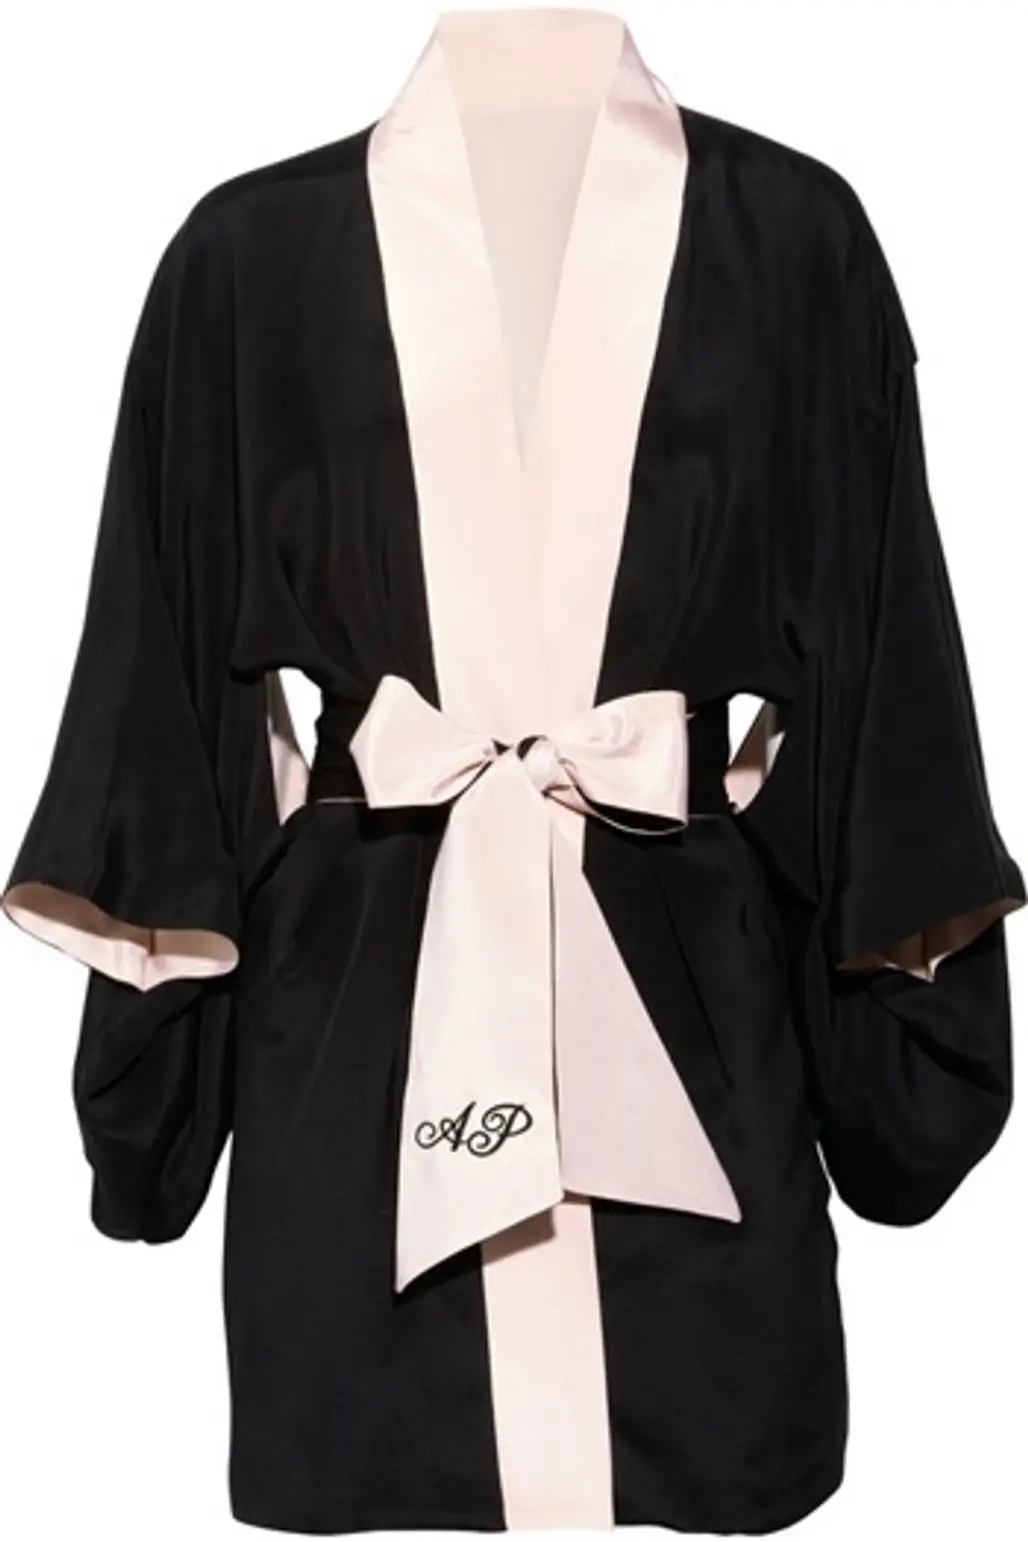 Agent Provocateur Silk Kimono